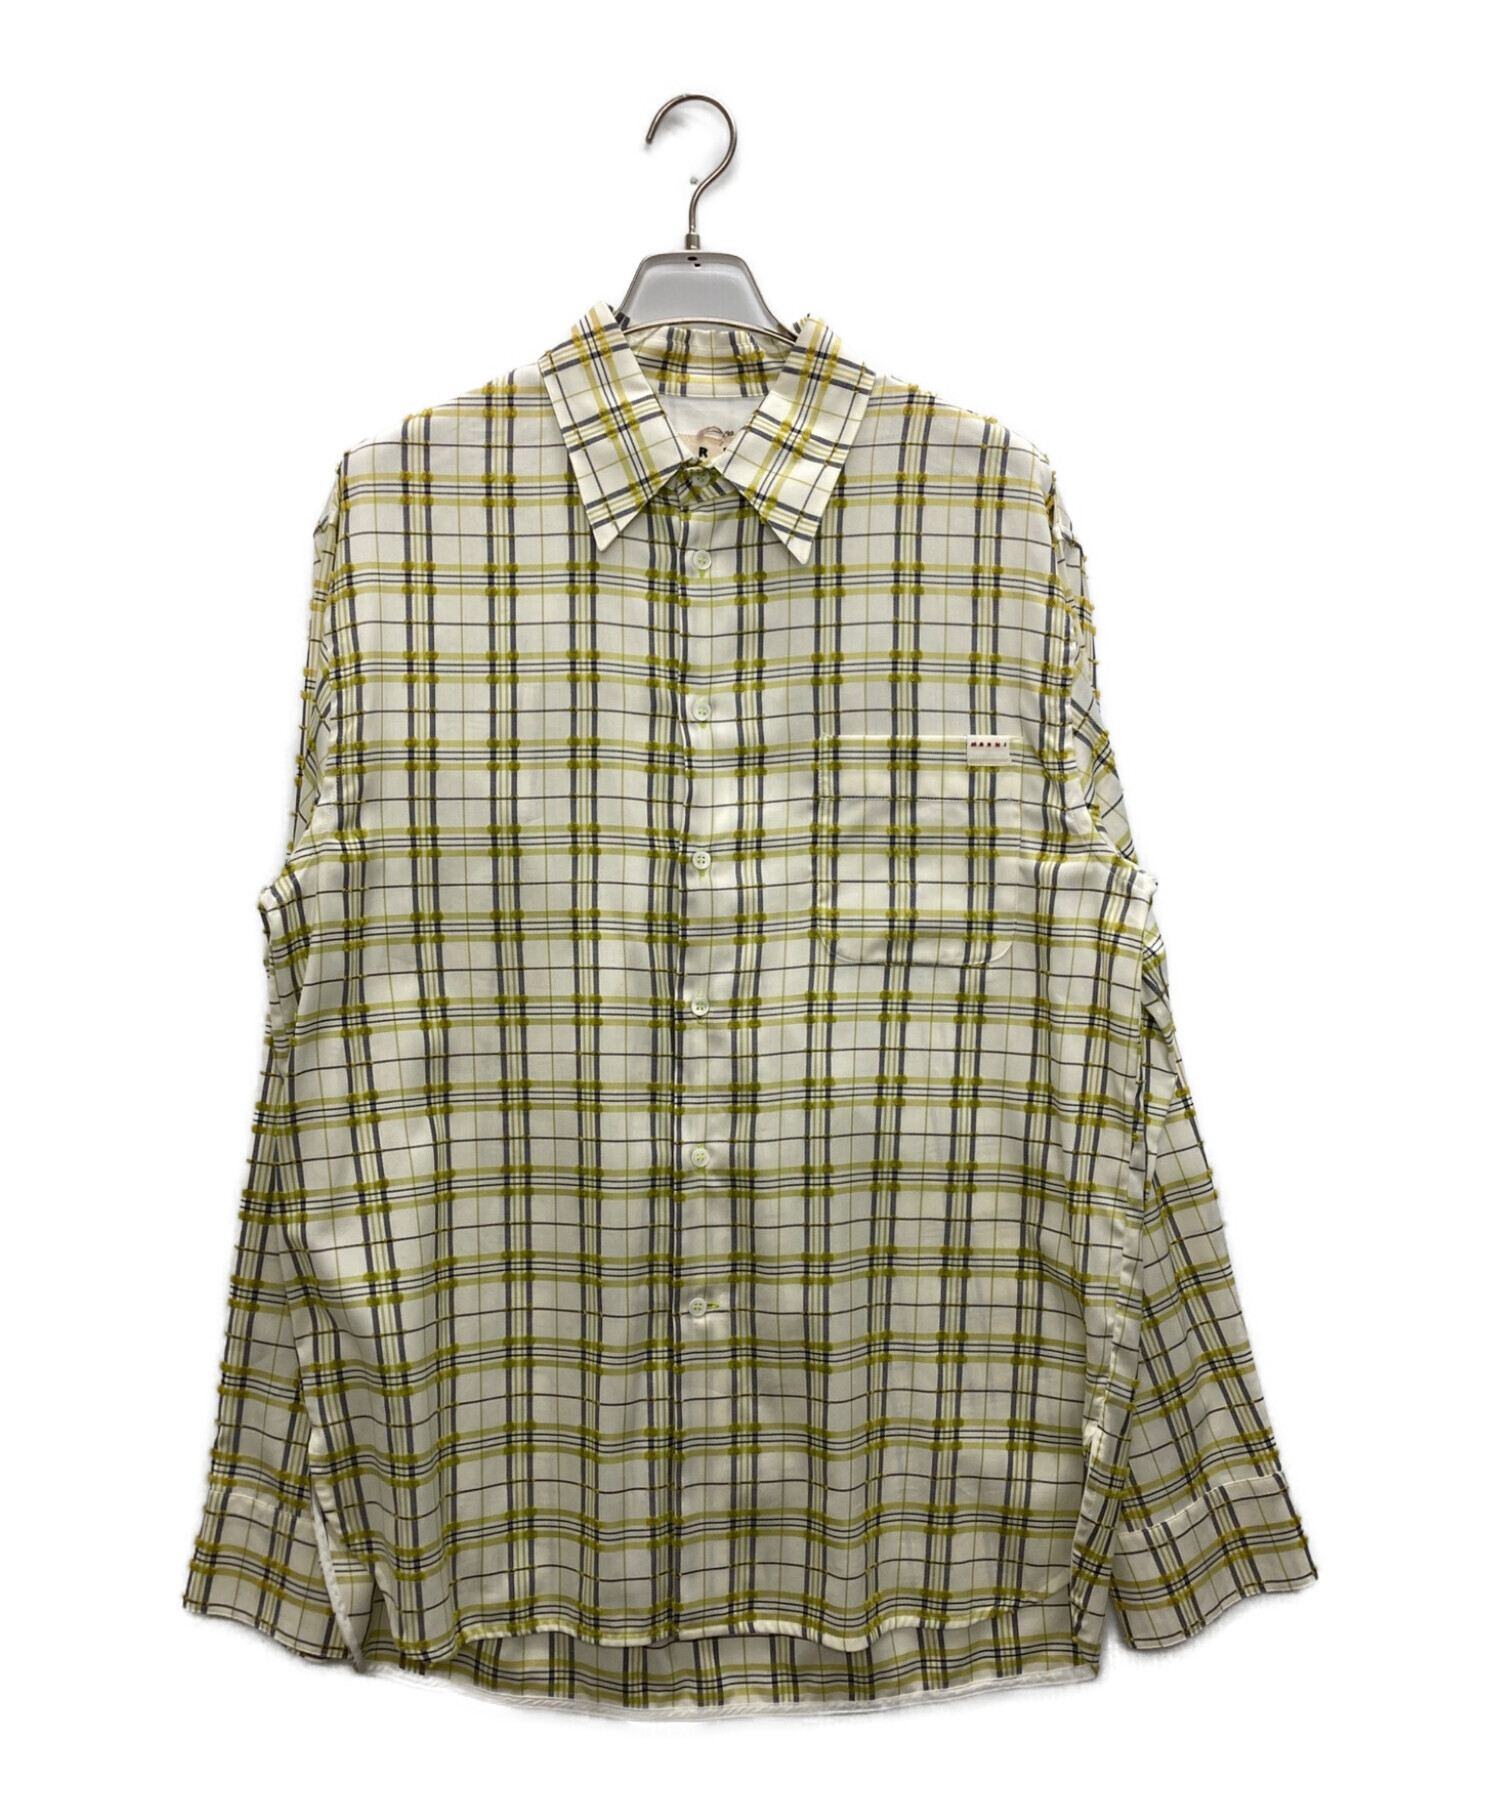 MARNI (マルニ) チェックパターンエンブロイダリーシャツ アイボリー×グリーン サイズ:50